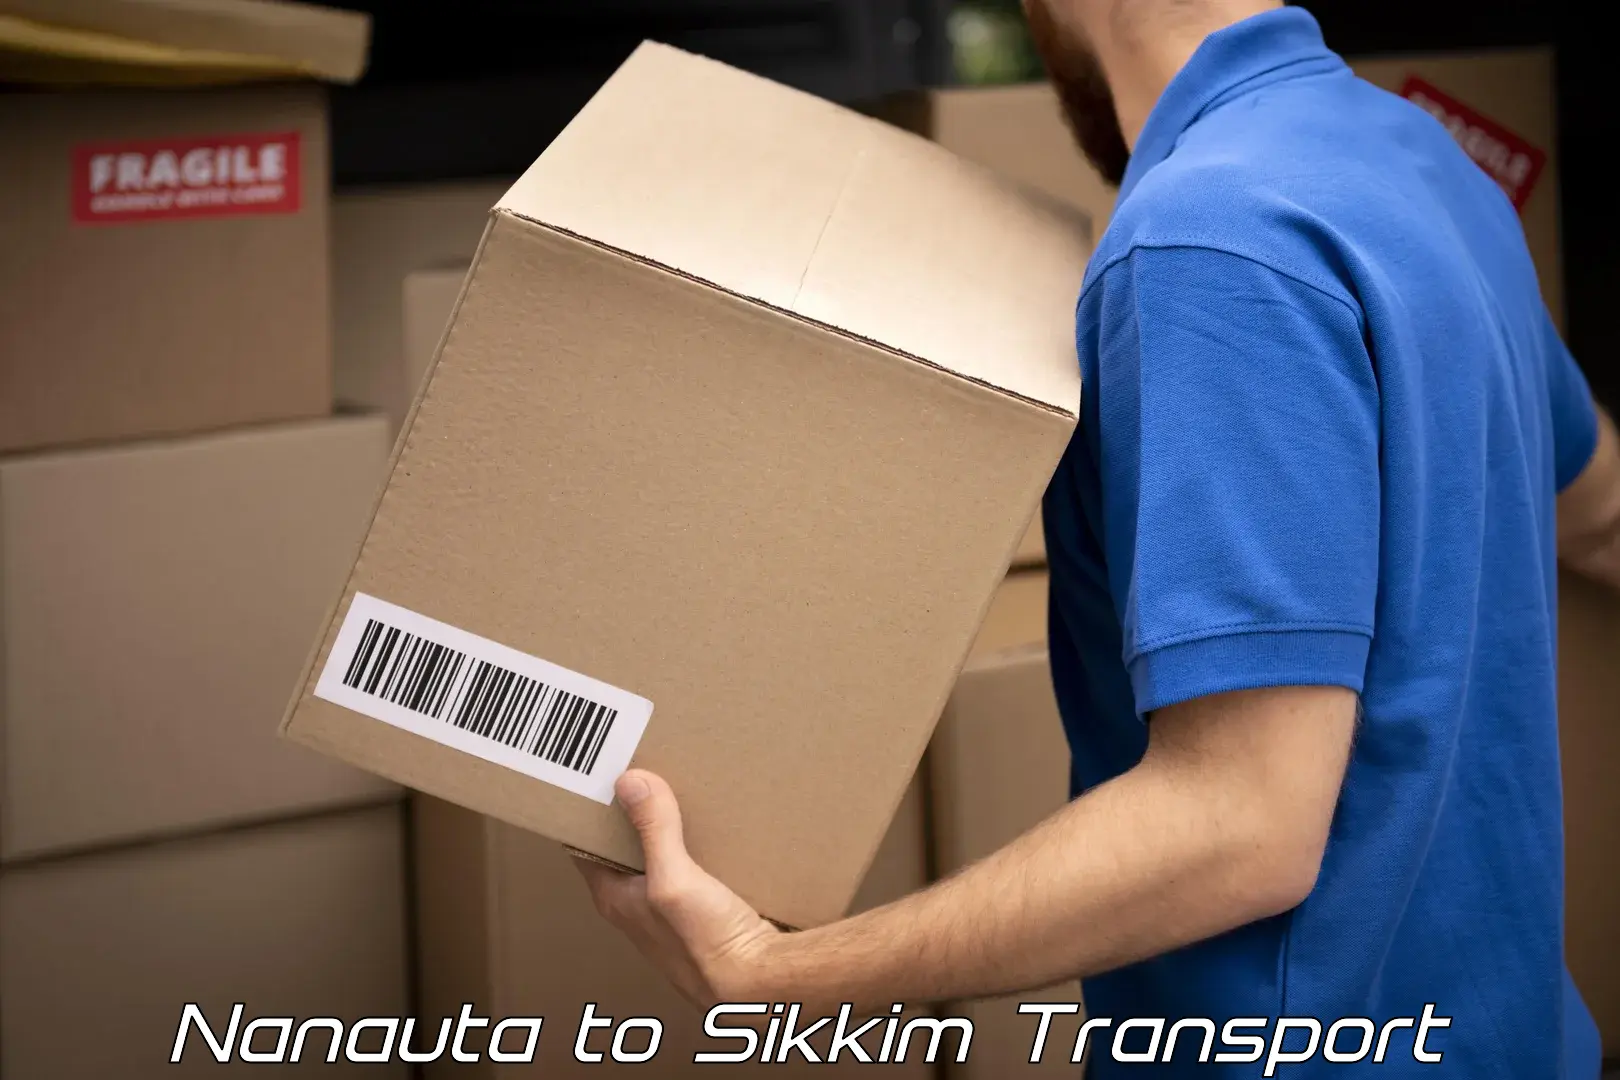 Furniture transport service Nanauta to Sikkim